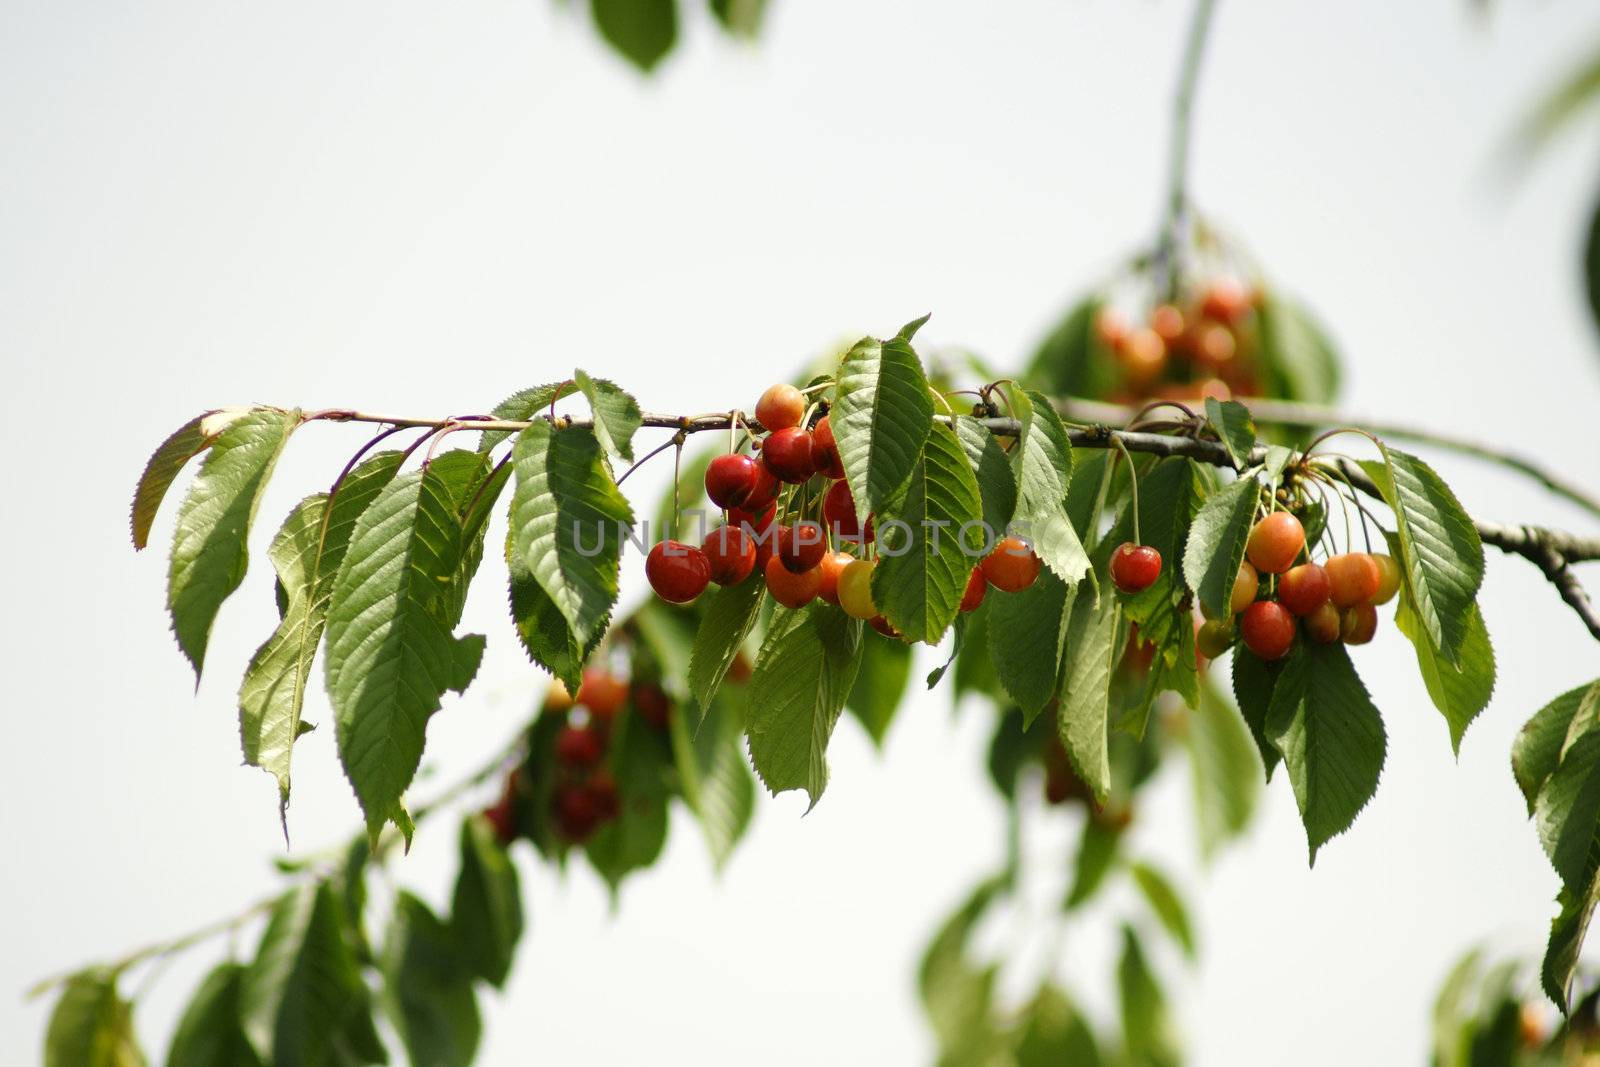 cherries on branches by pixelman